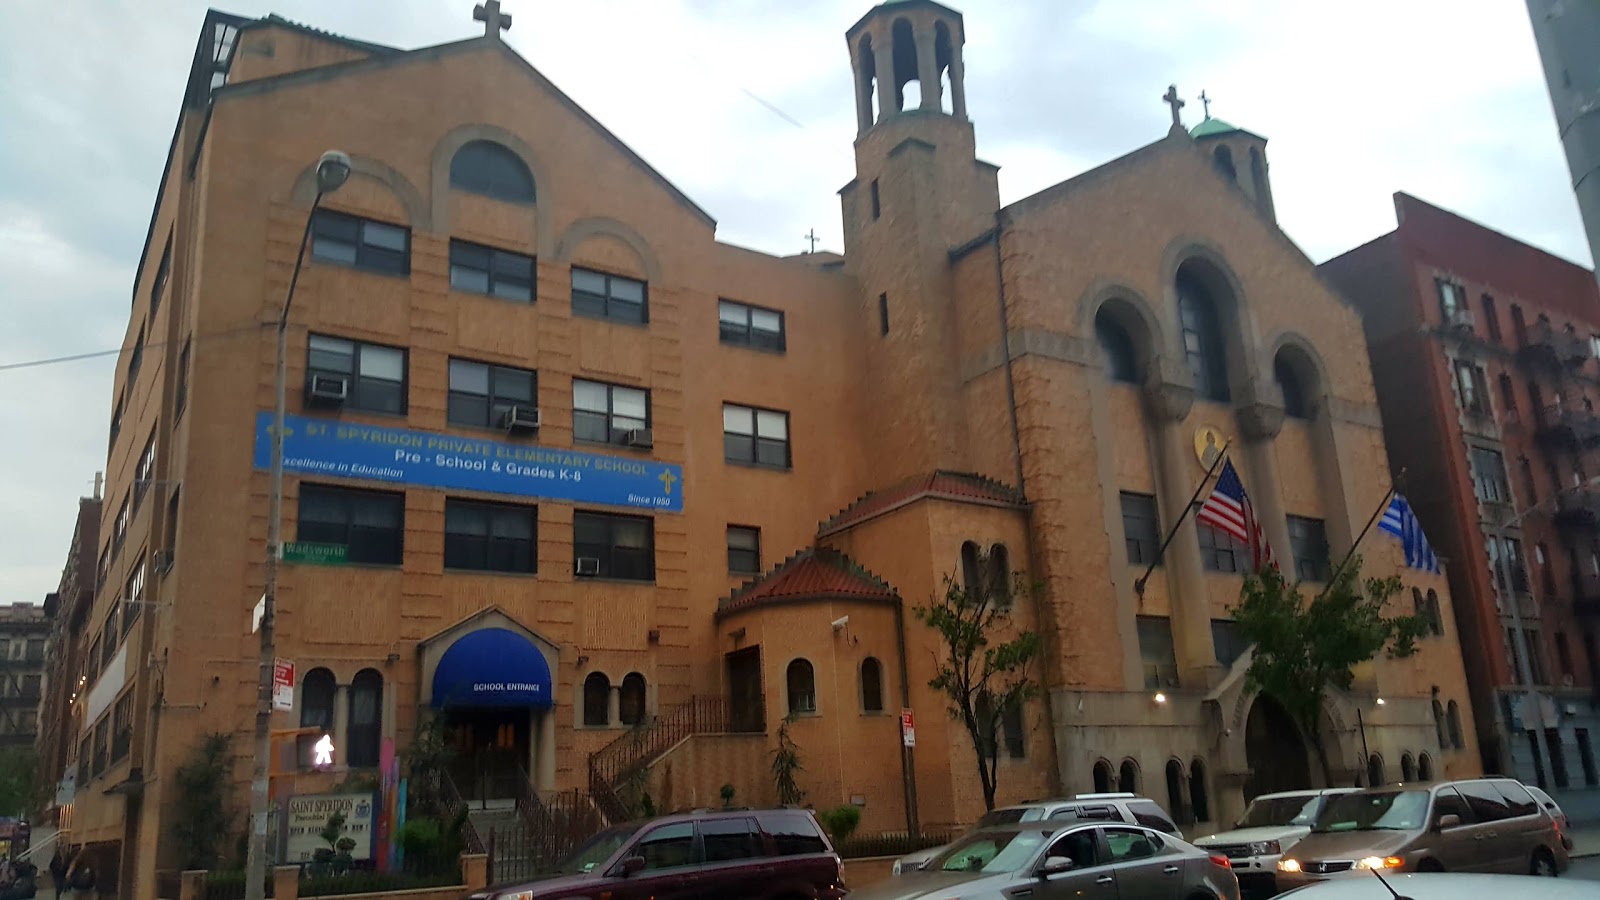 Photo of St Spyridon Elementary School in New York City, New York, United States - 1 Picture of Point of interest, Establishment, School